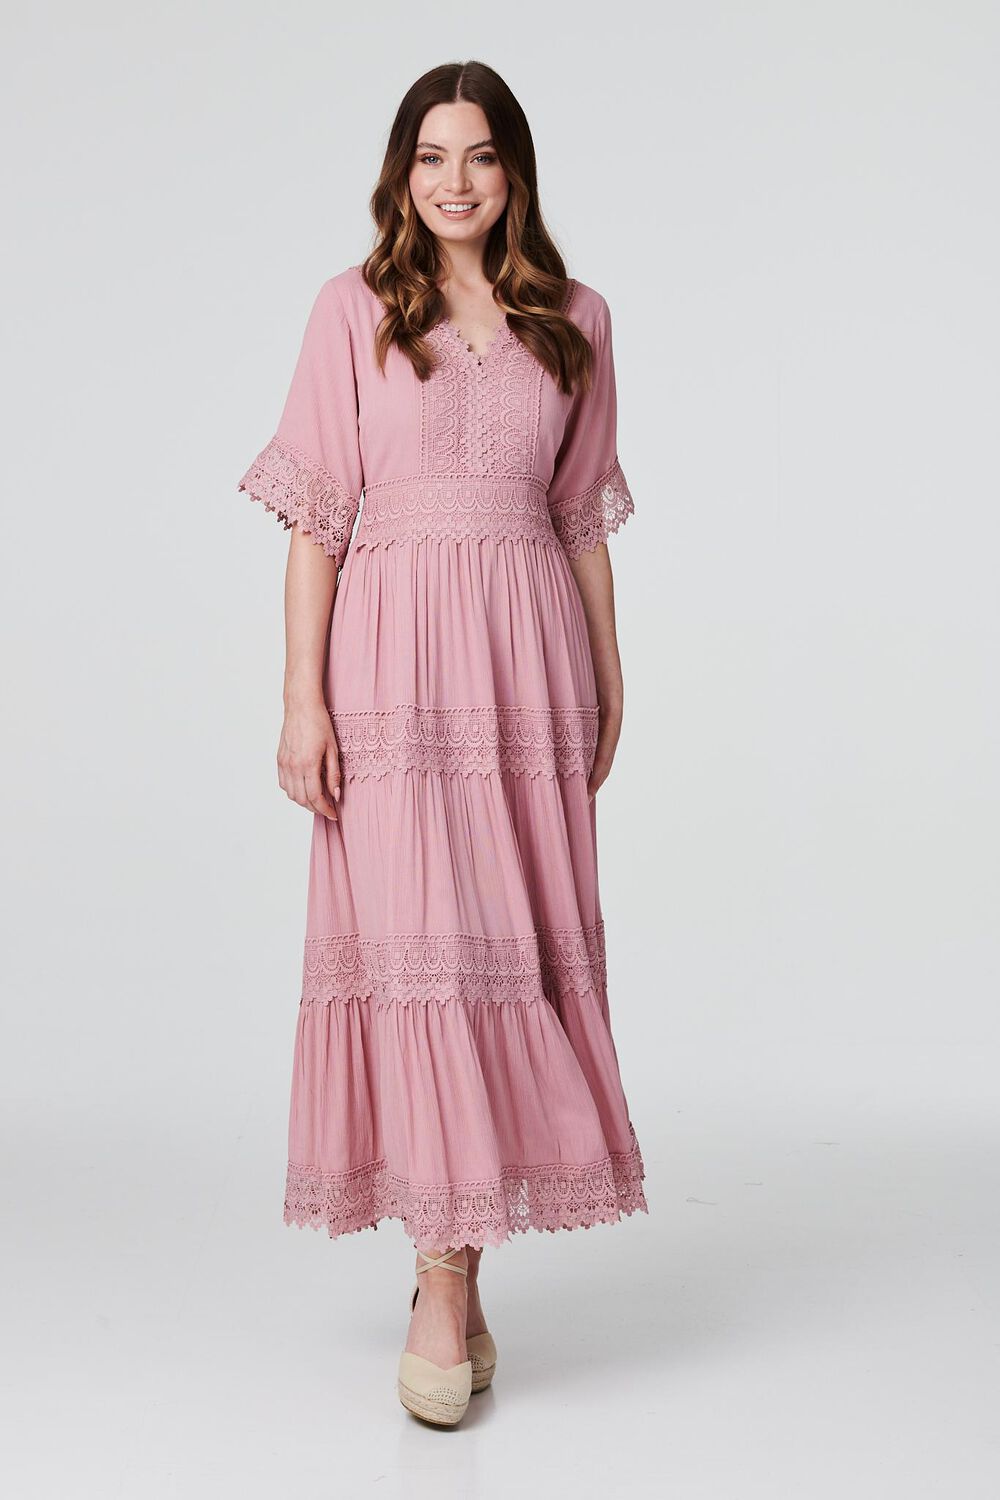 Izabel London Pink - Short Sleeve Crochet Maxi Dress, Size: 14